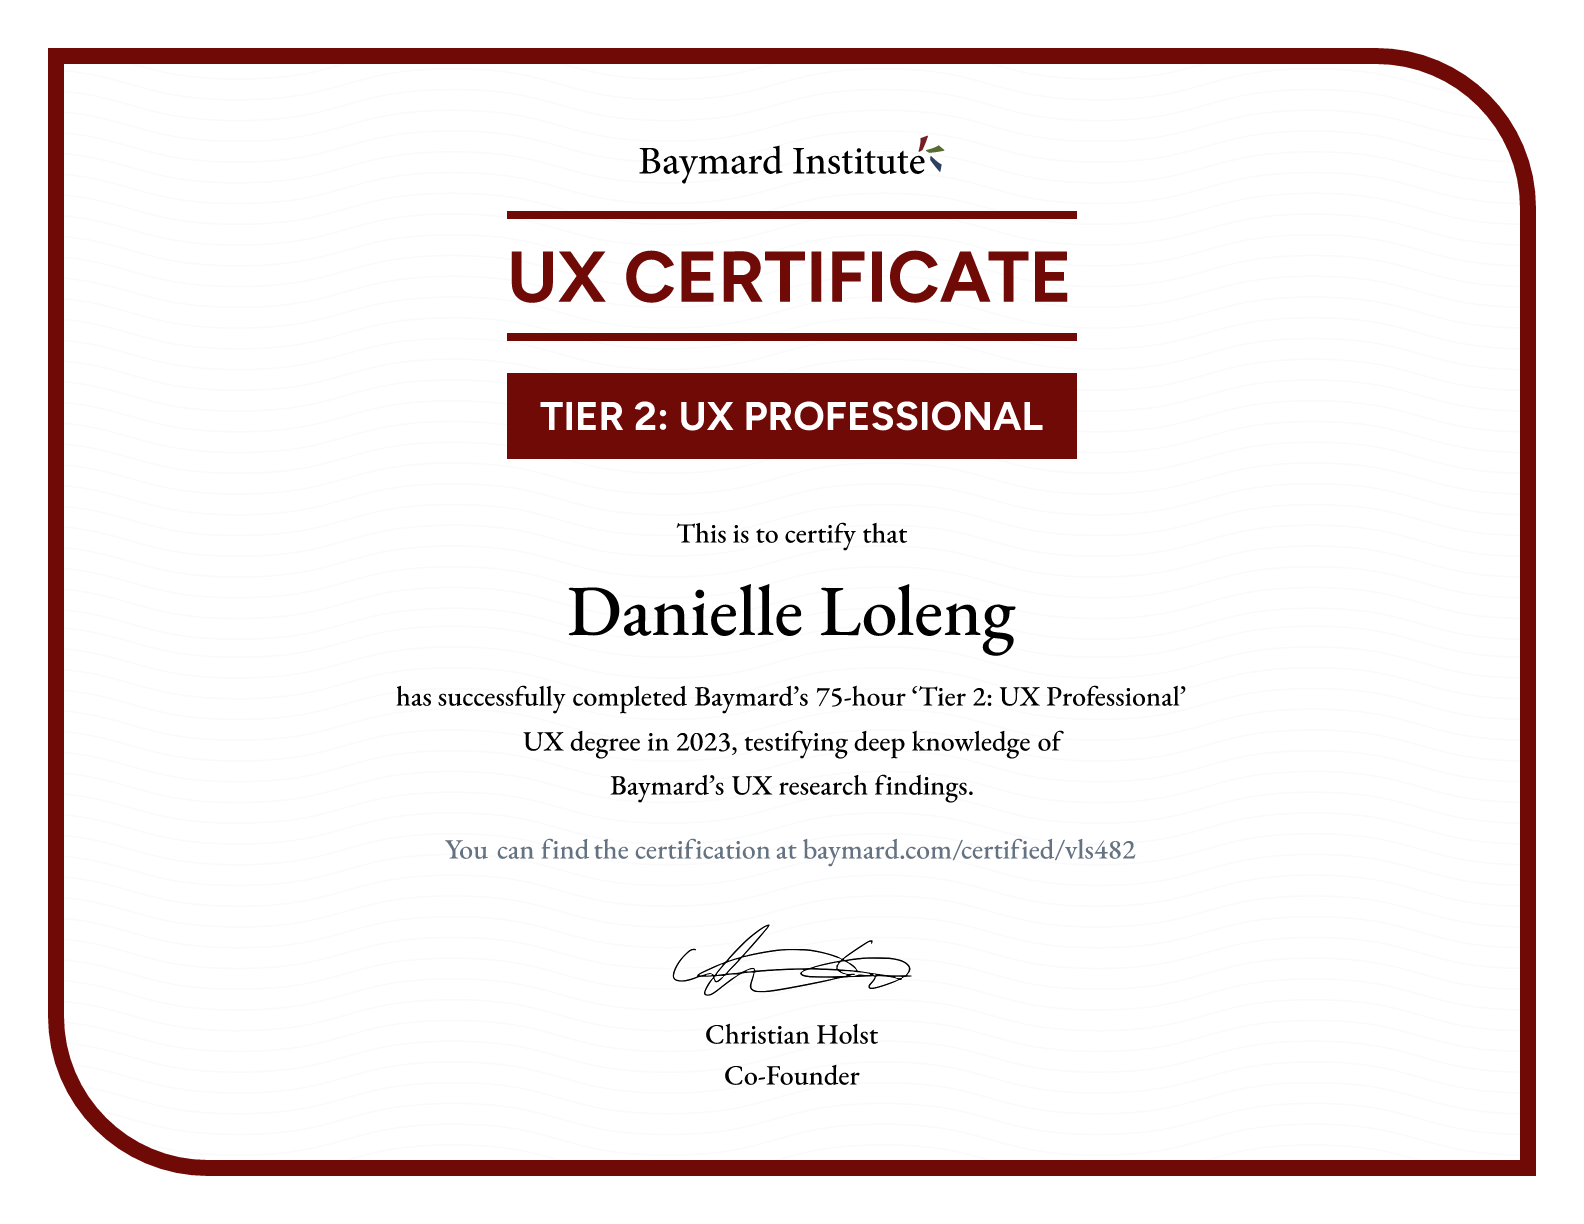 Danielle Loleng’s certificate